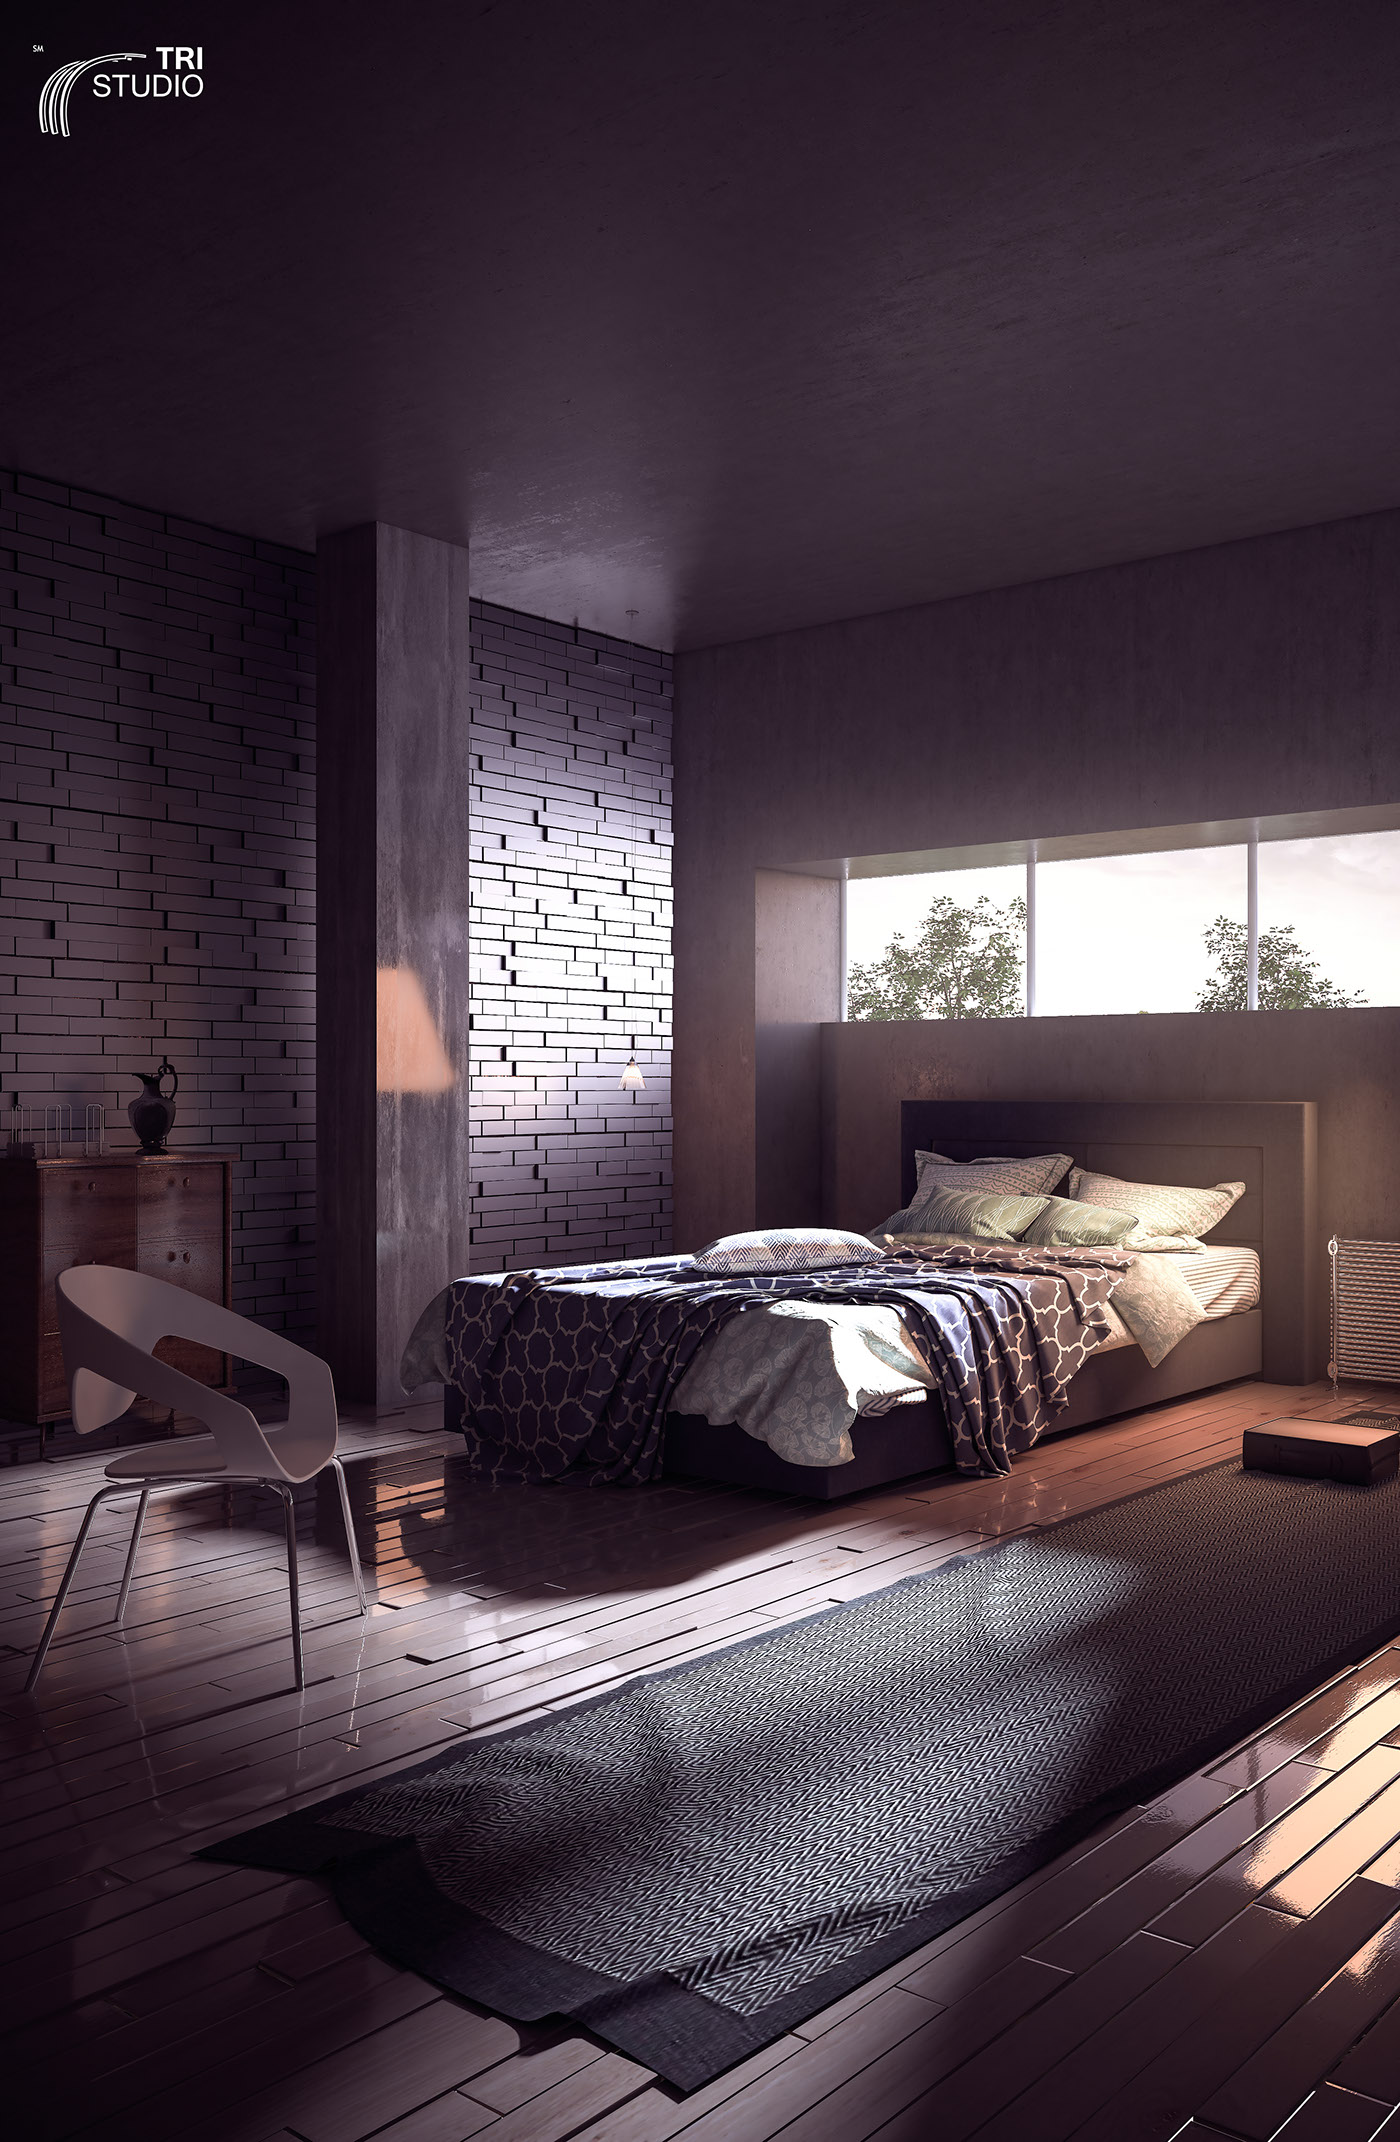 design architechture Interior bed visualize freelancer course room lighting